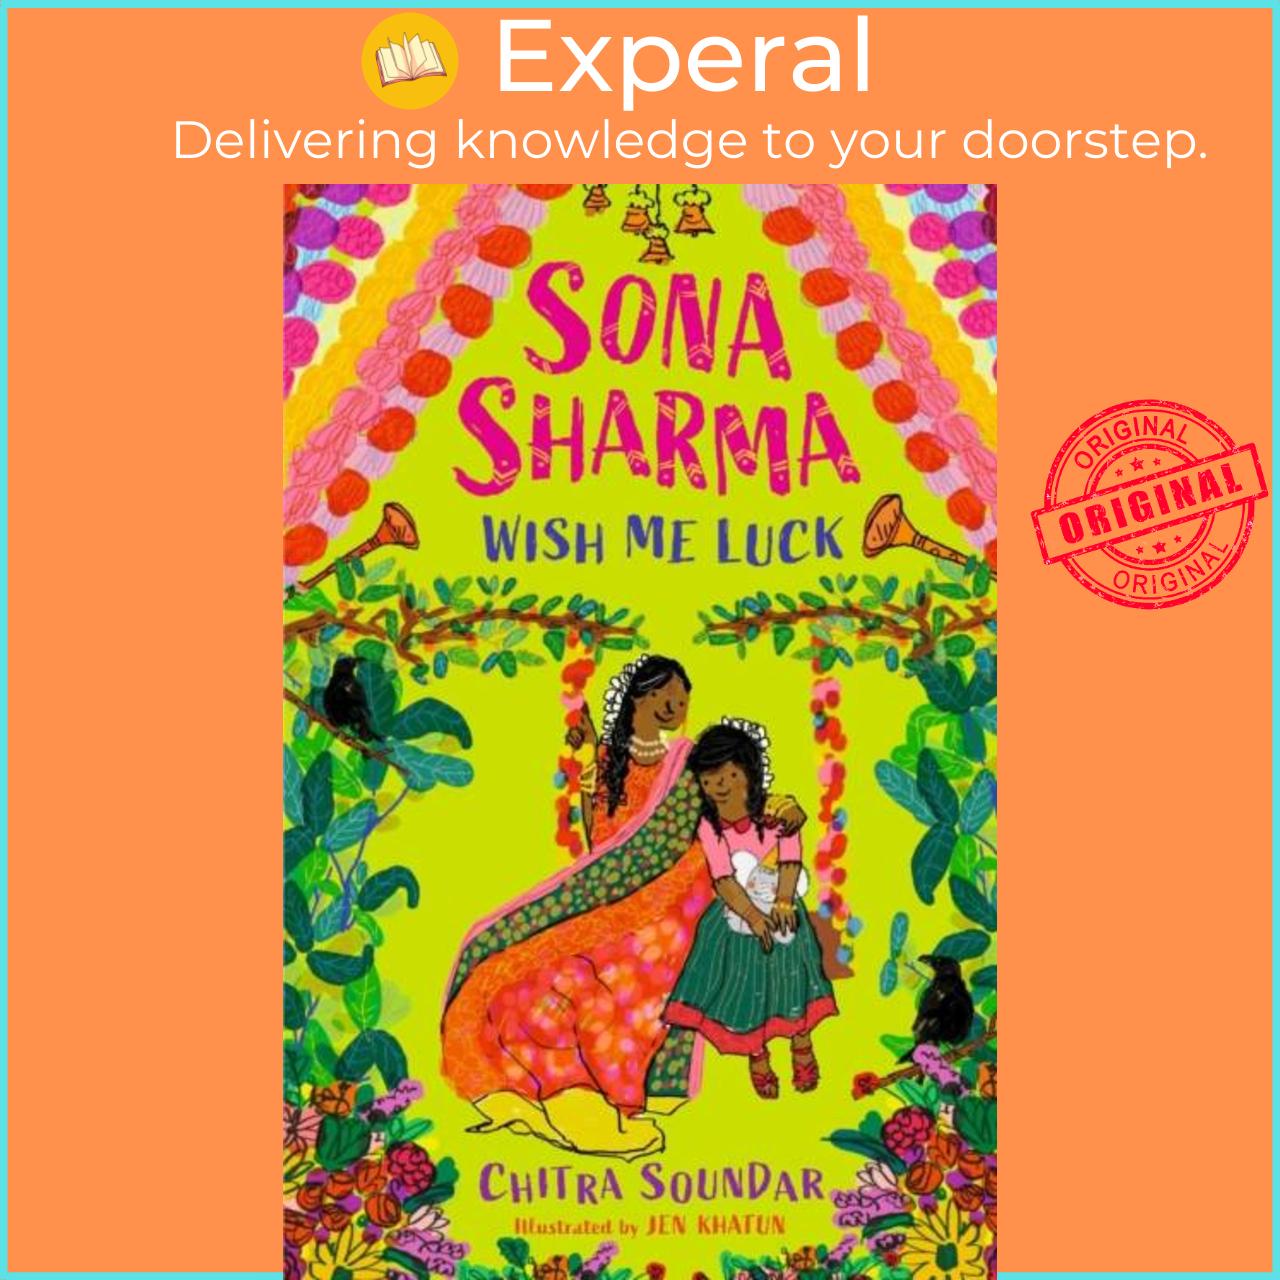 Sách - Sona Sharma, Wish Me Luck by Jen Khatun (UK edition, paperback)